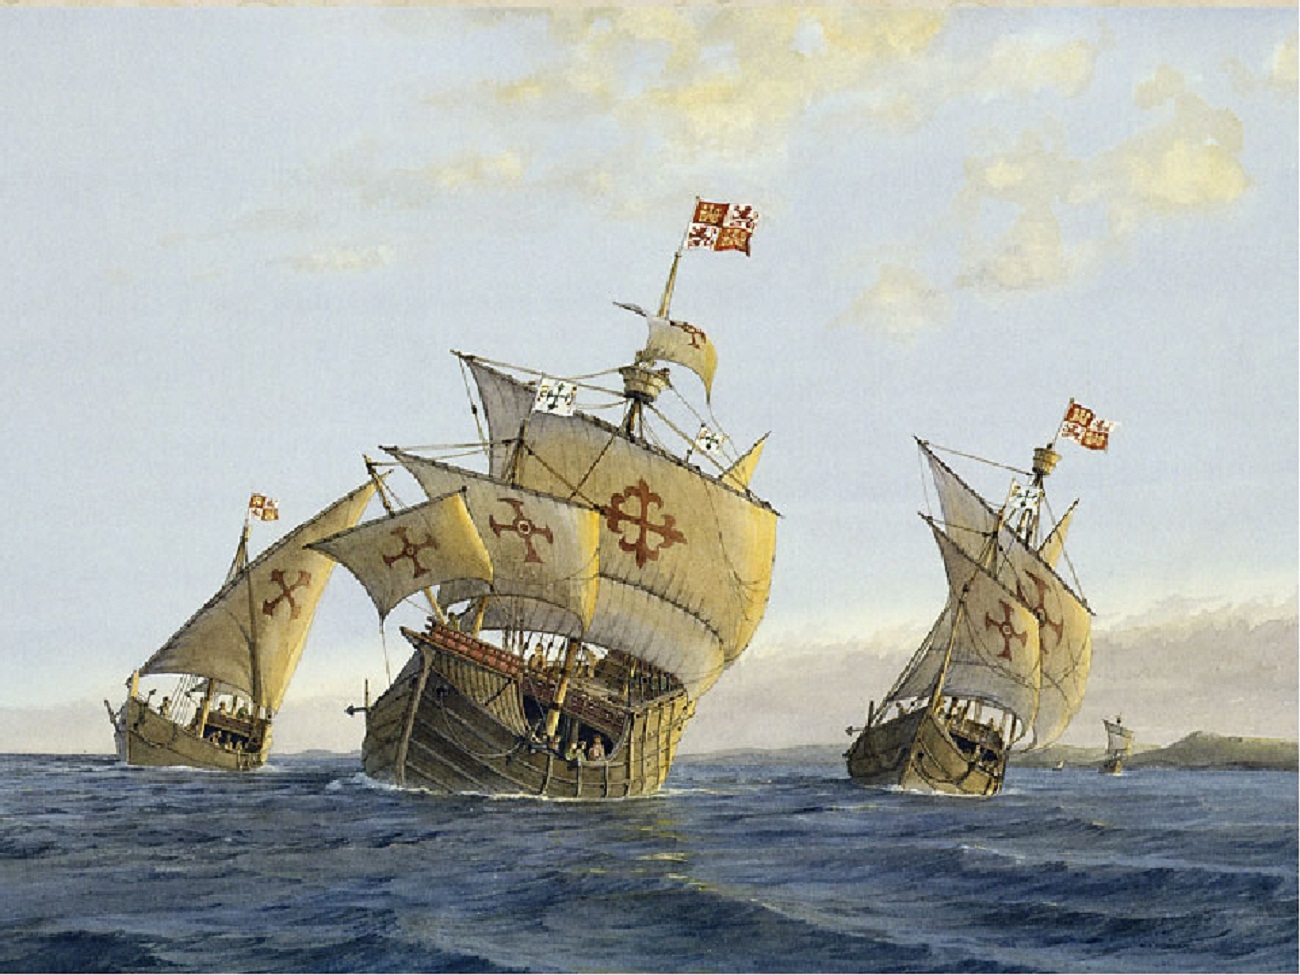 Судно экспедиции колумба. Корабль Христофора Колумба Нинья.